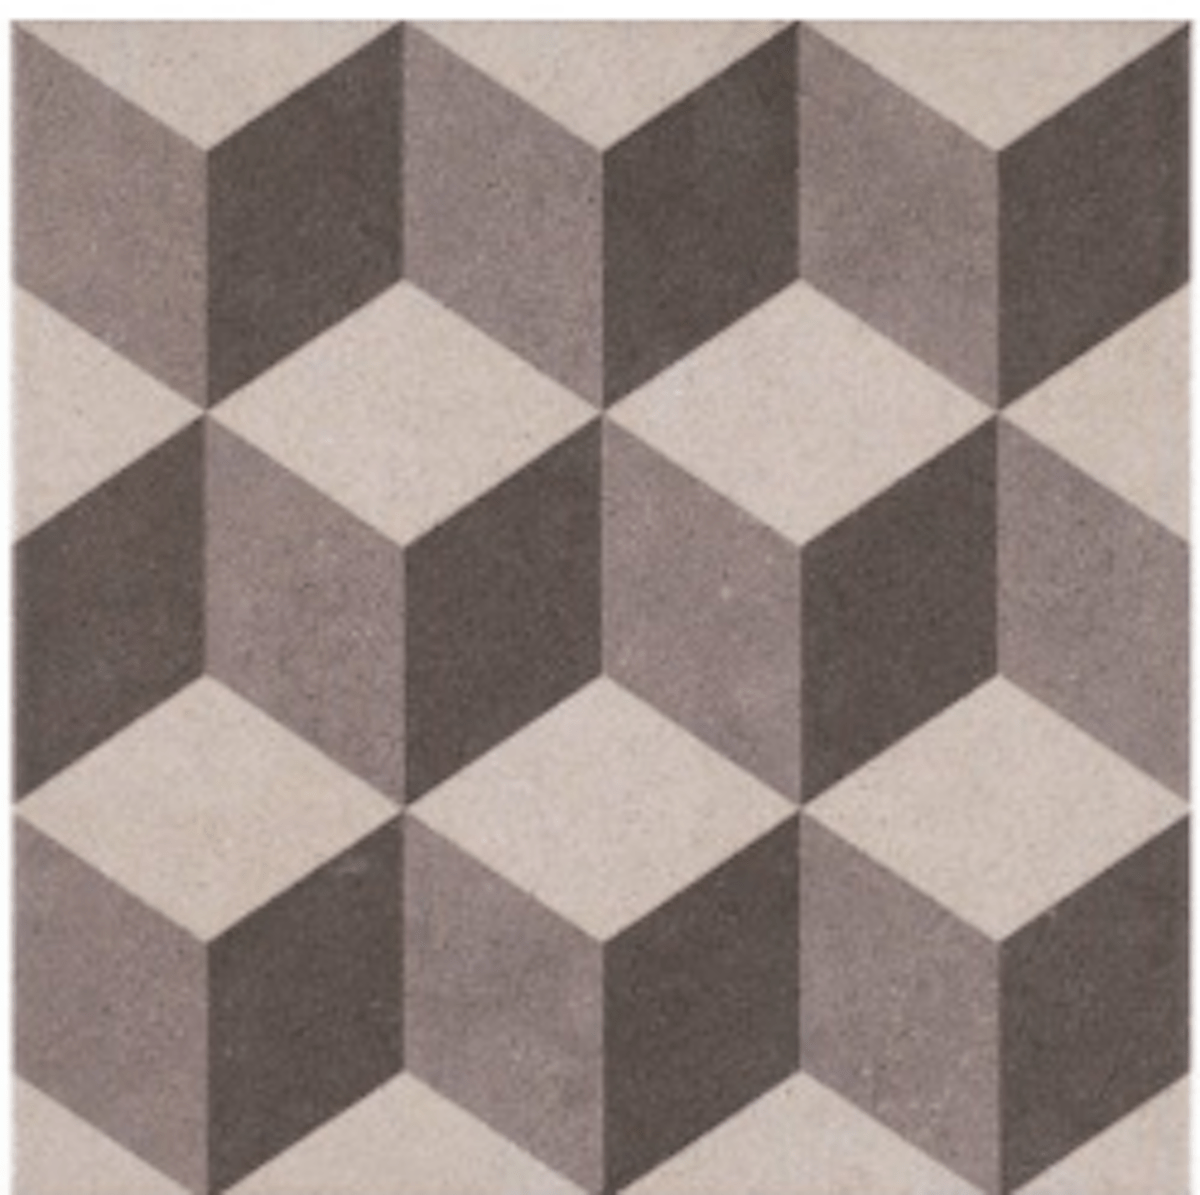 A designer pattern